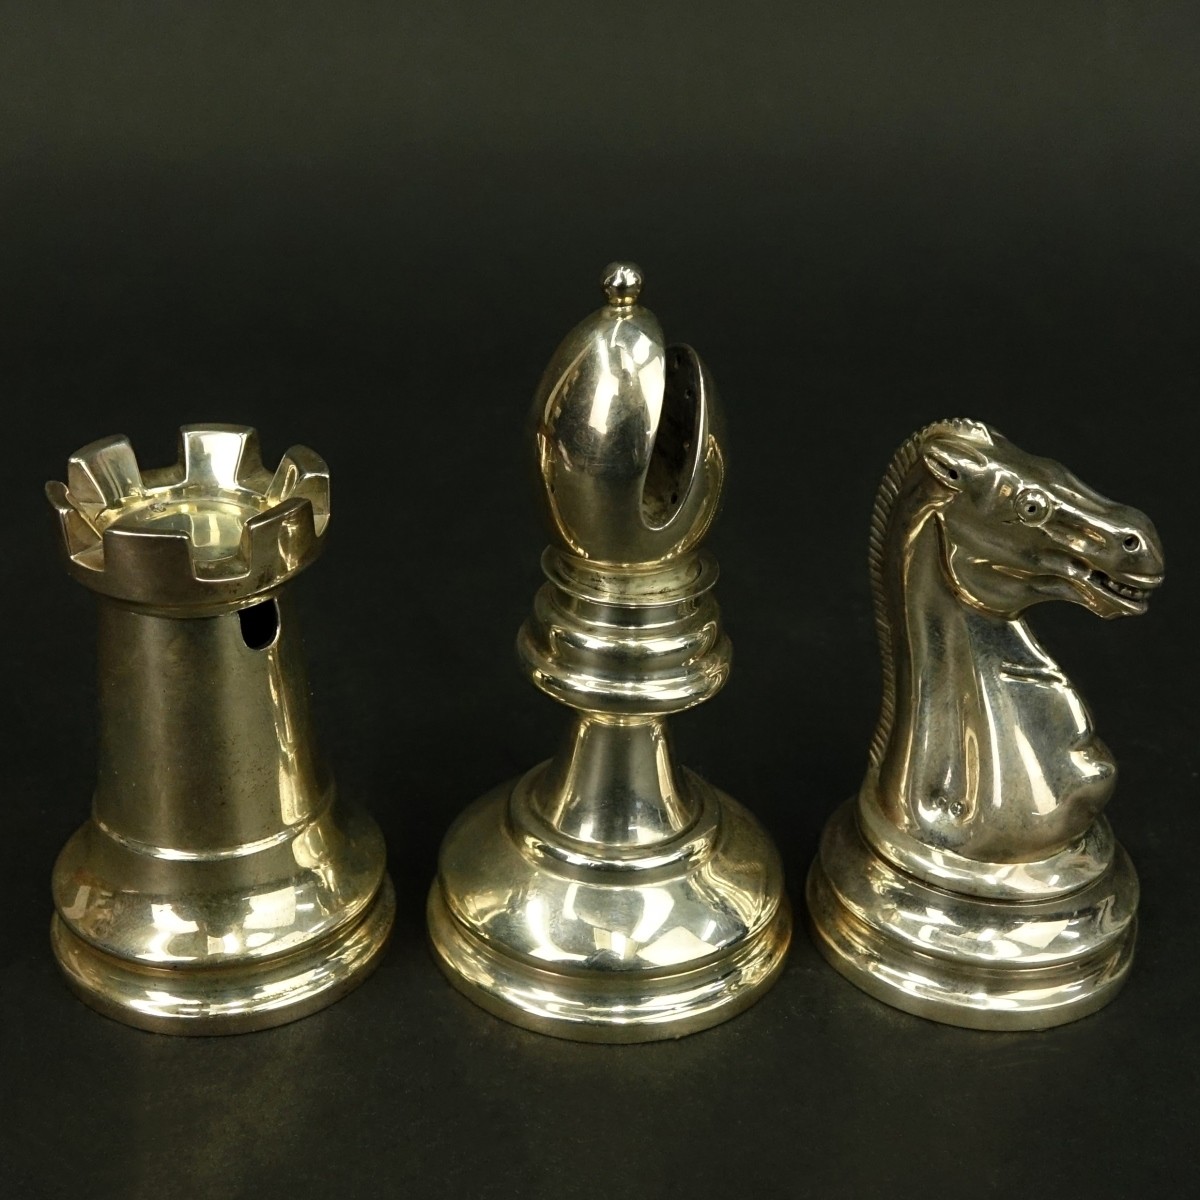 3 Pc Set English Silver "Chess" Salt & Pepper